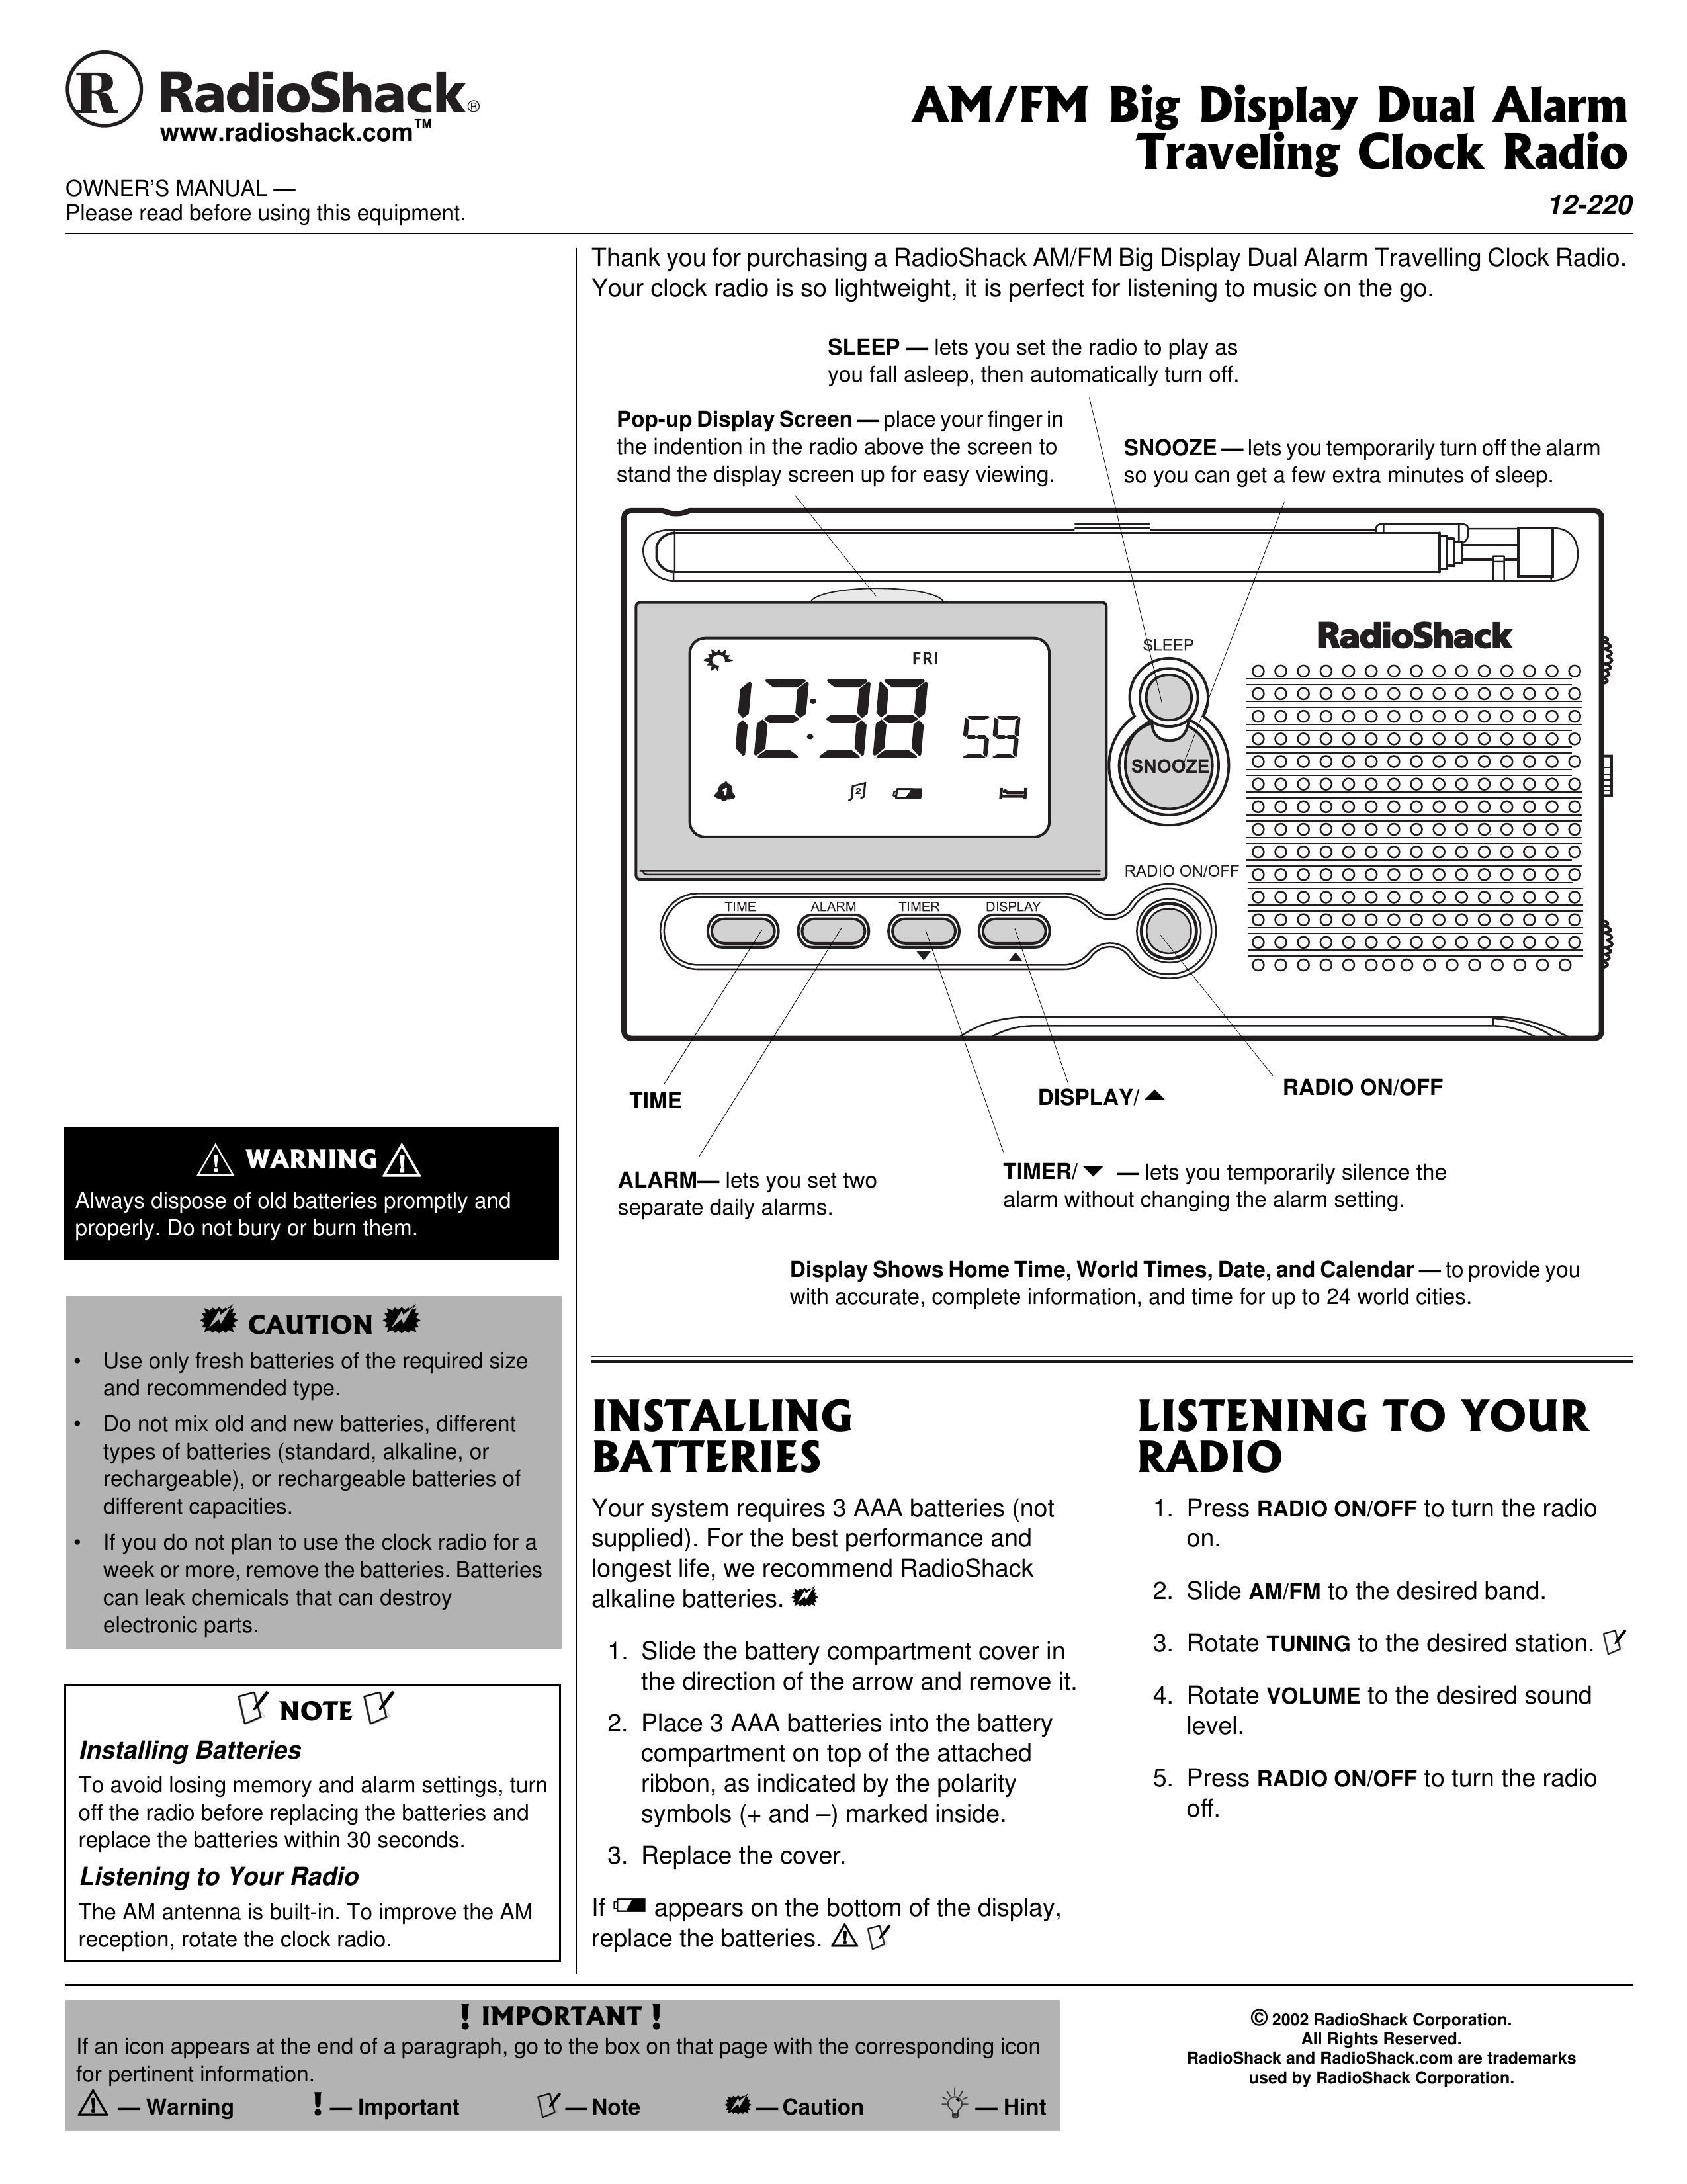 Radio Shack 12-220 Clock Radio User Manual